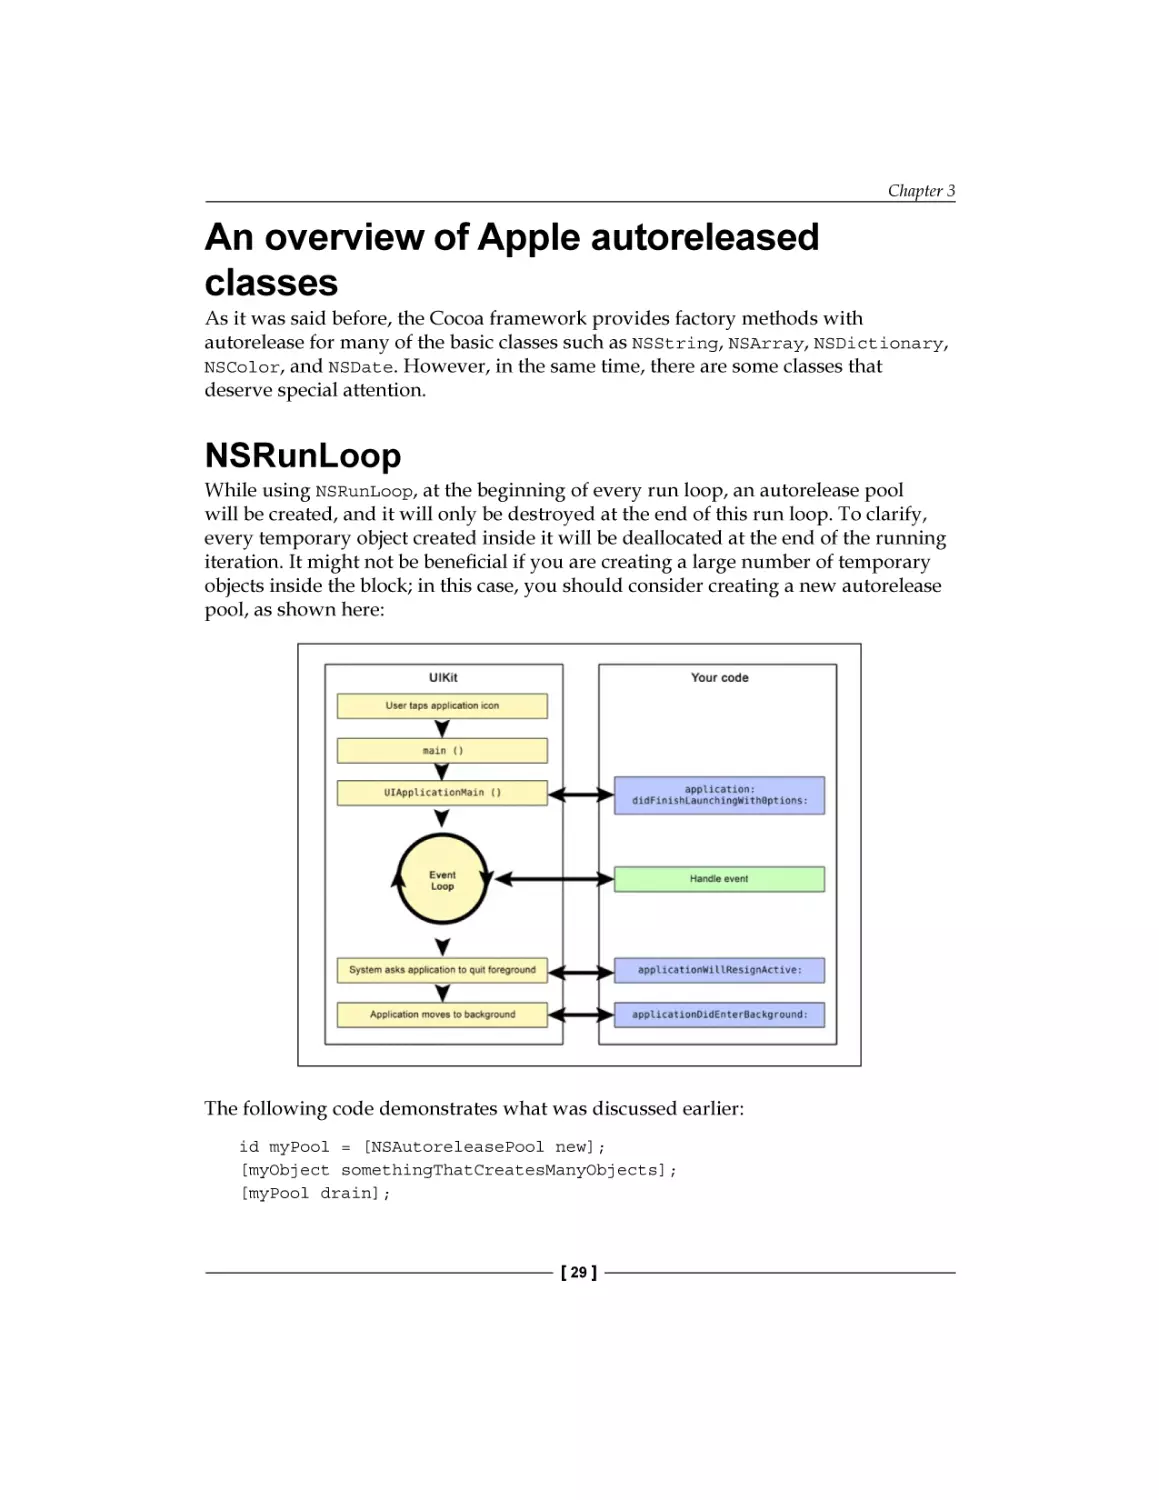 Overview of Apple autoreleased classes
NSRunLoop